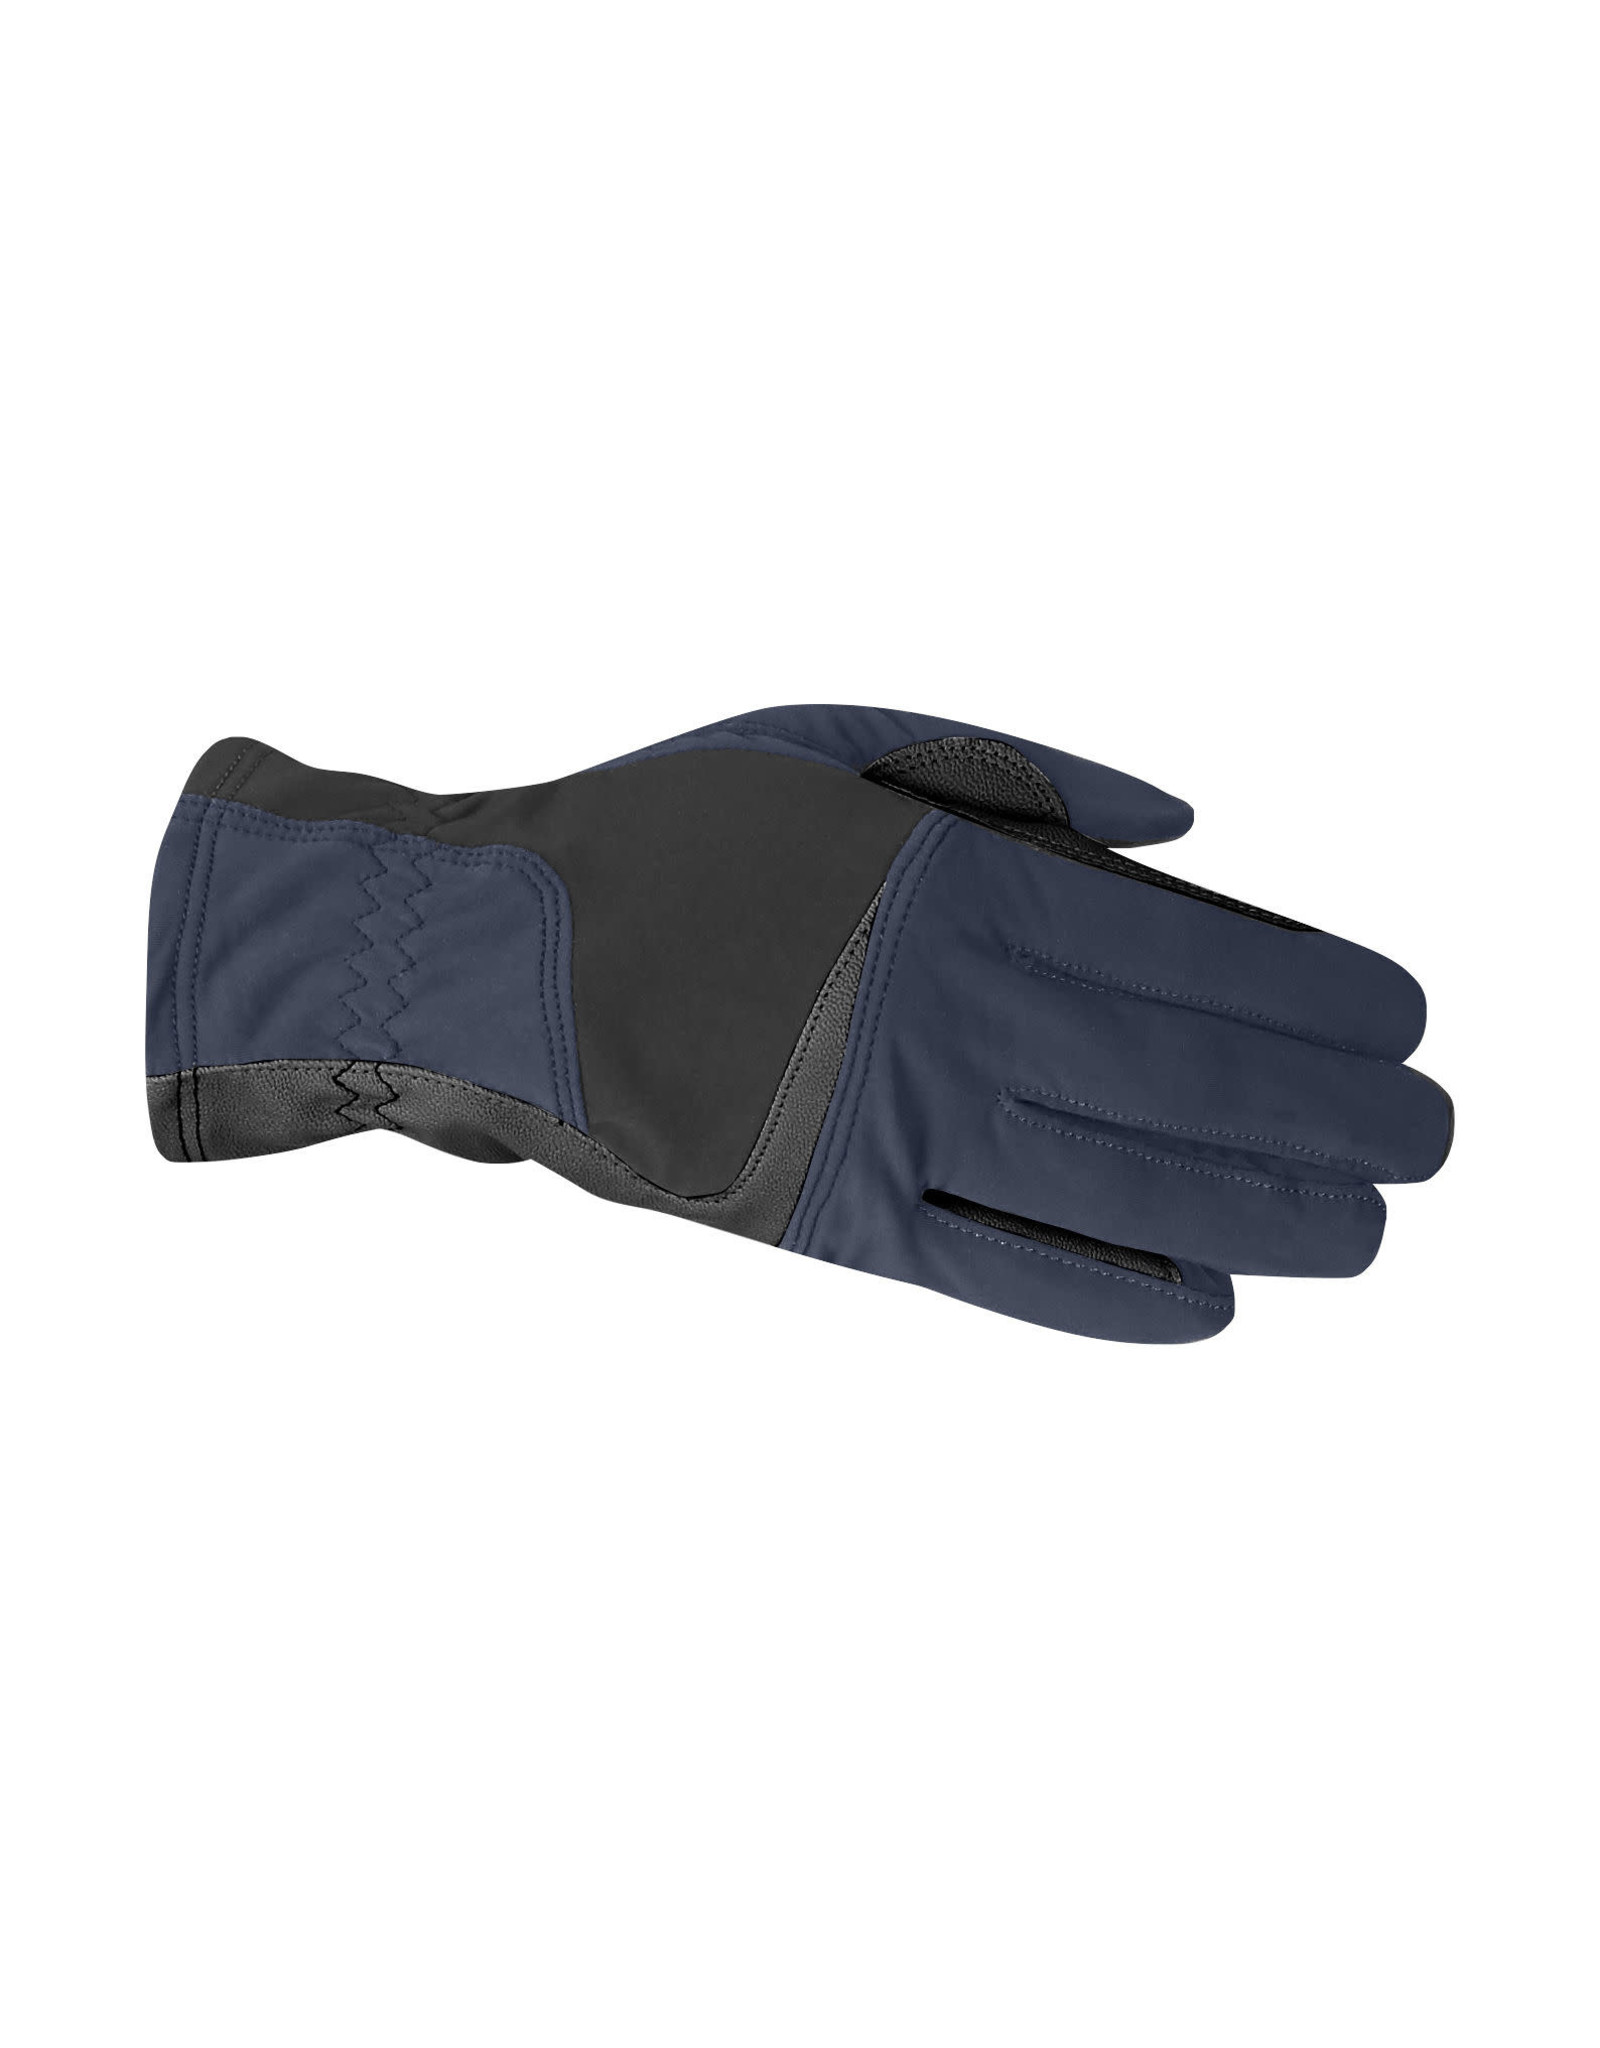 Kerrits Ice Fil® Gloves